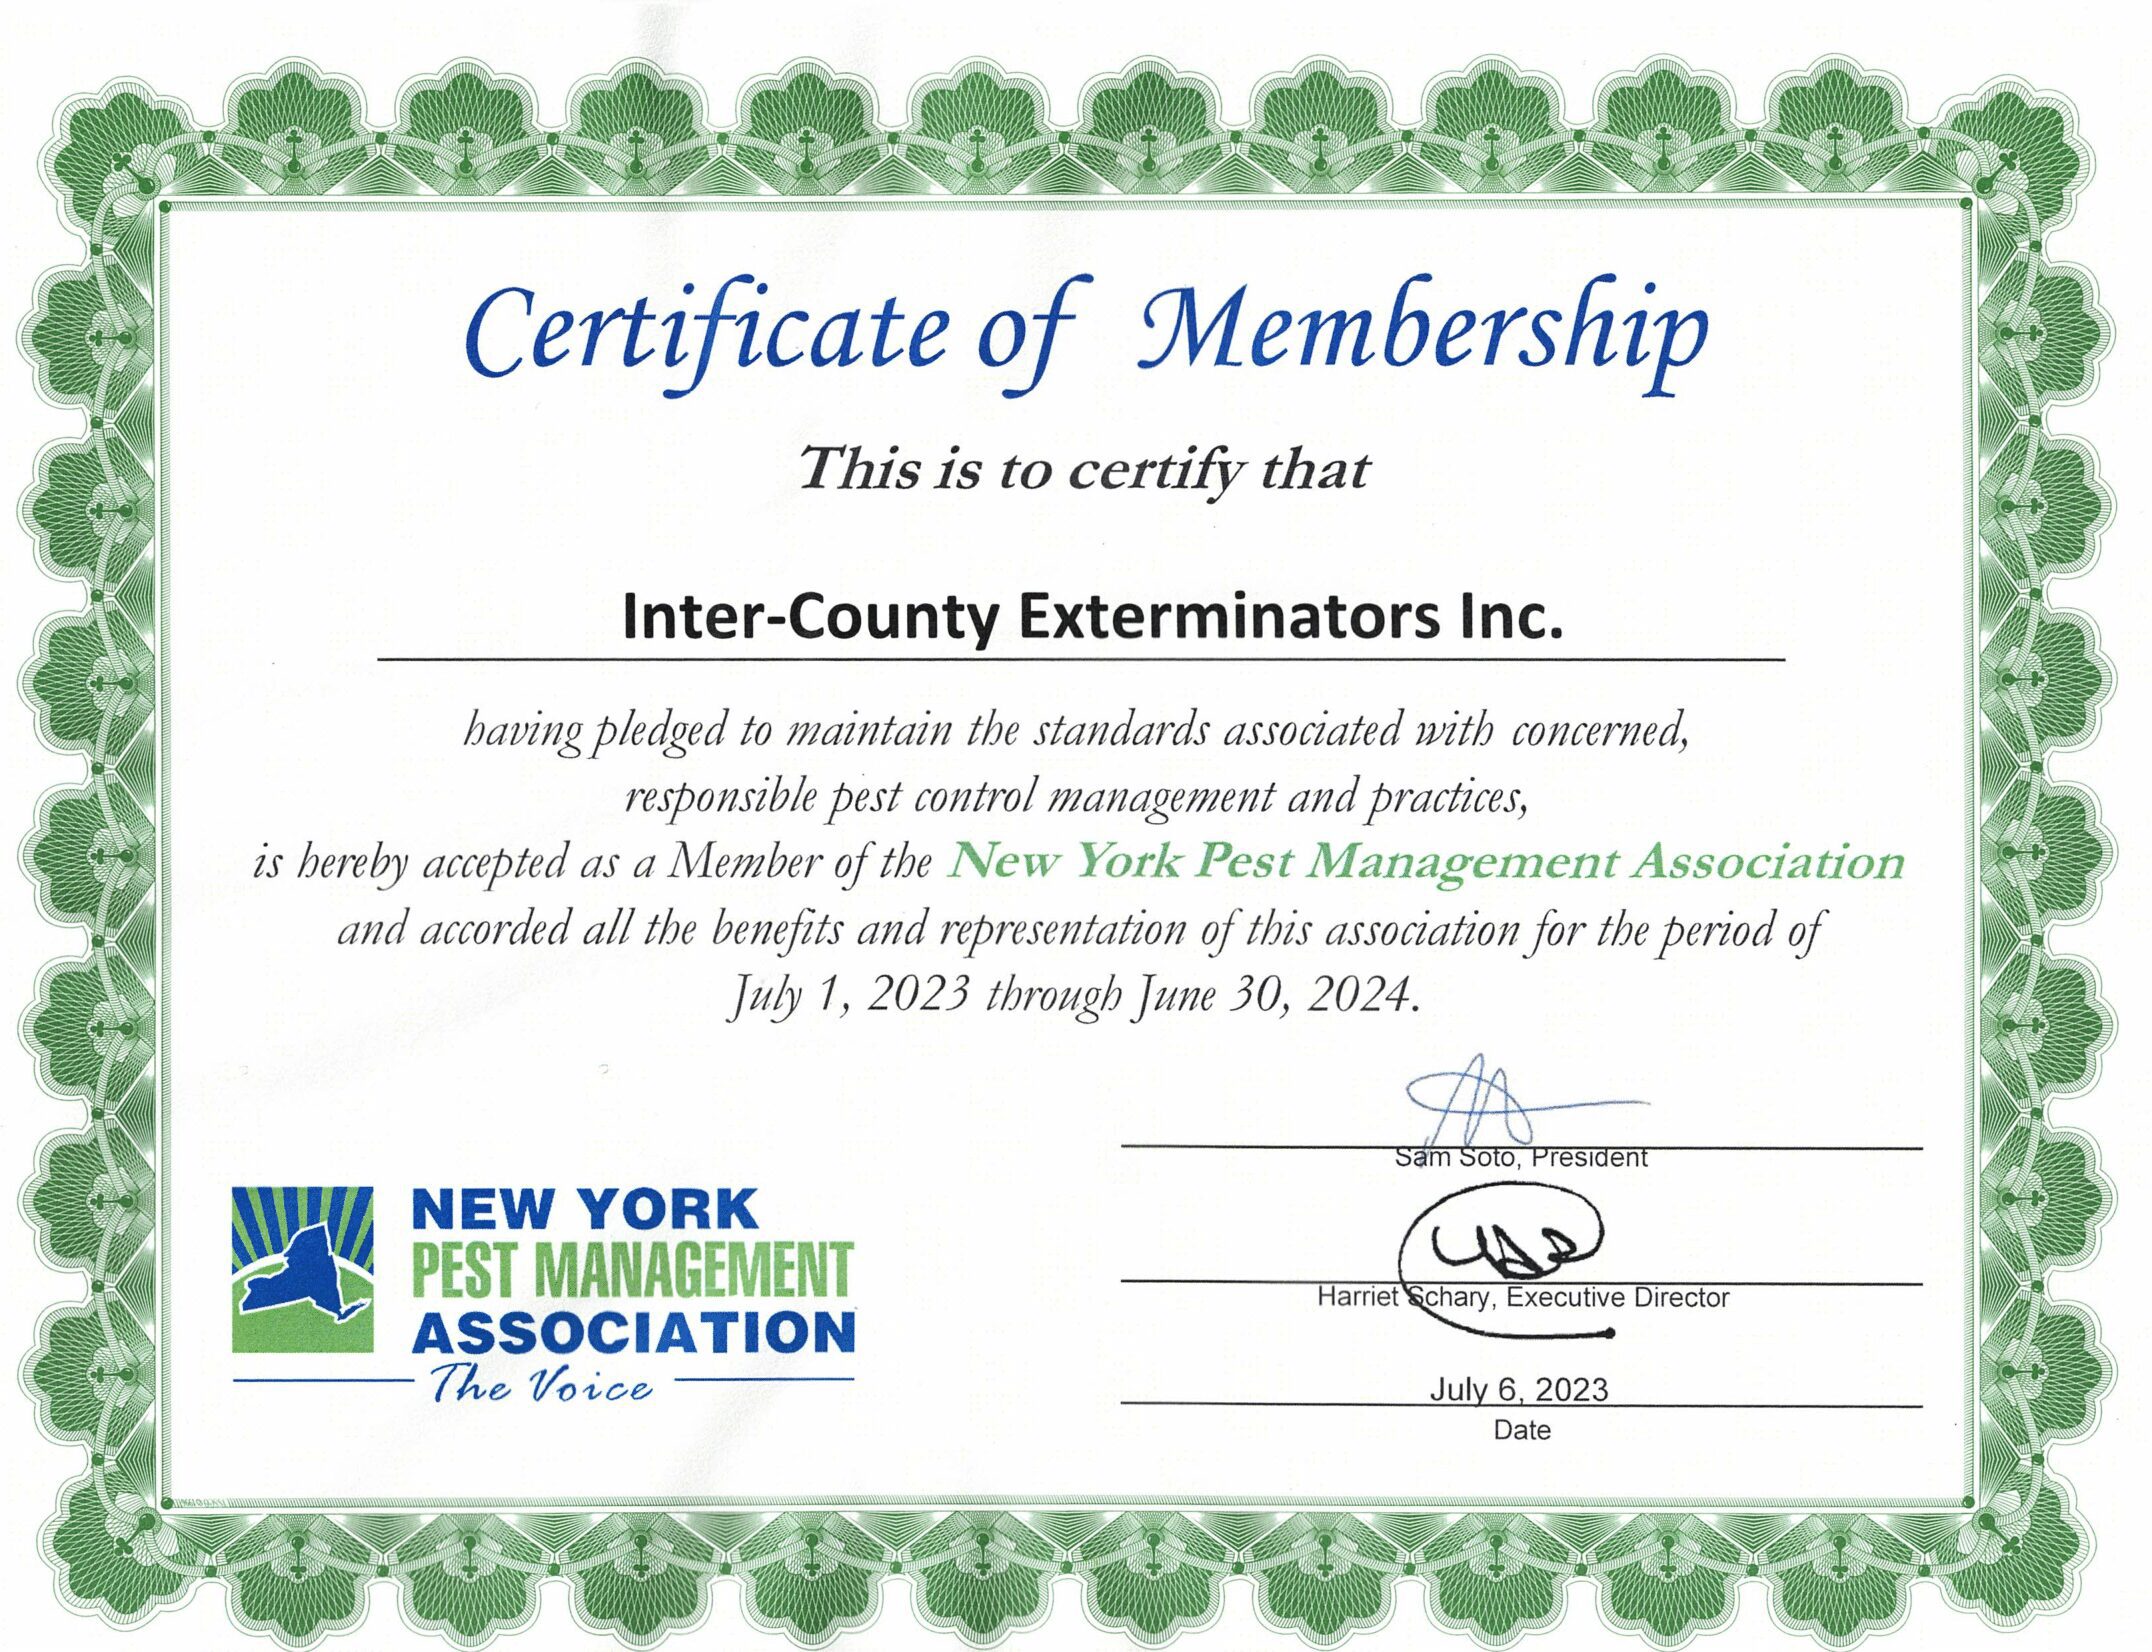 National Pest Management Association certificate